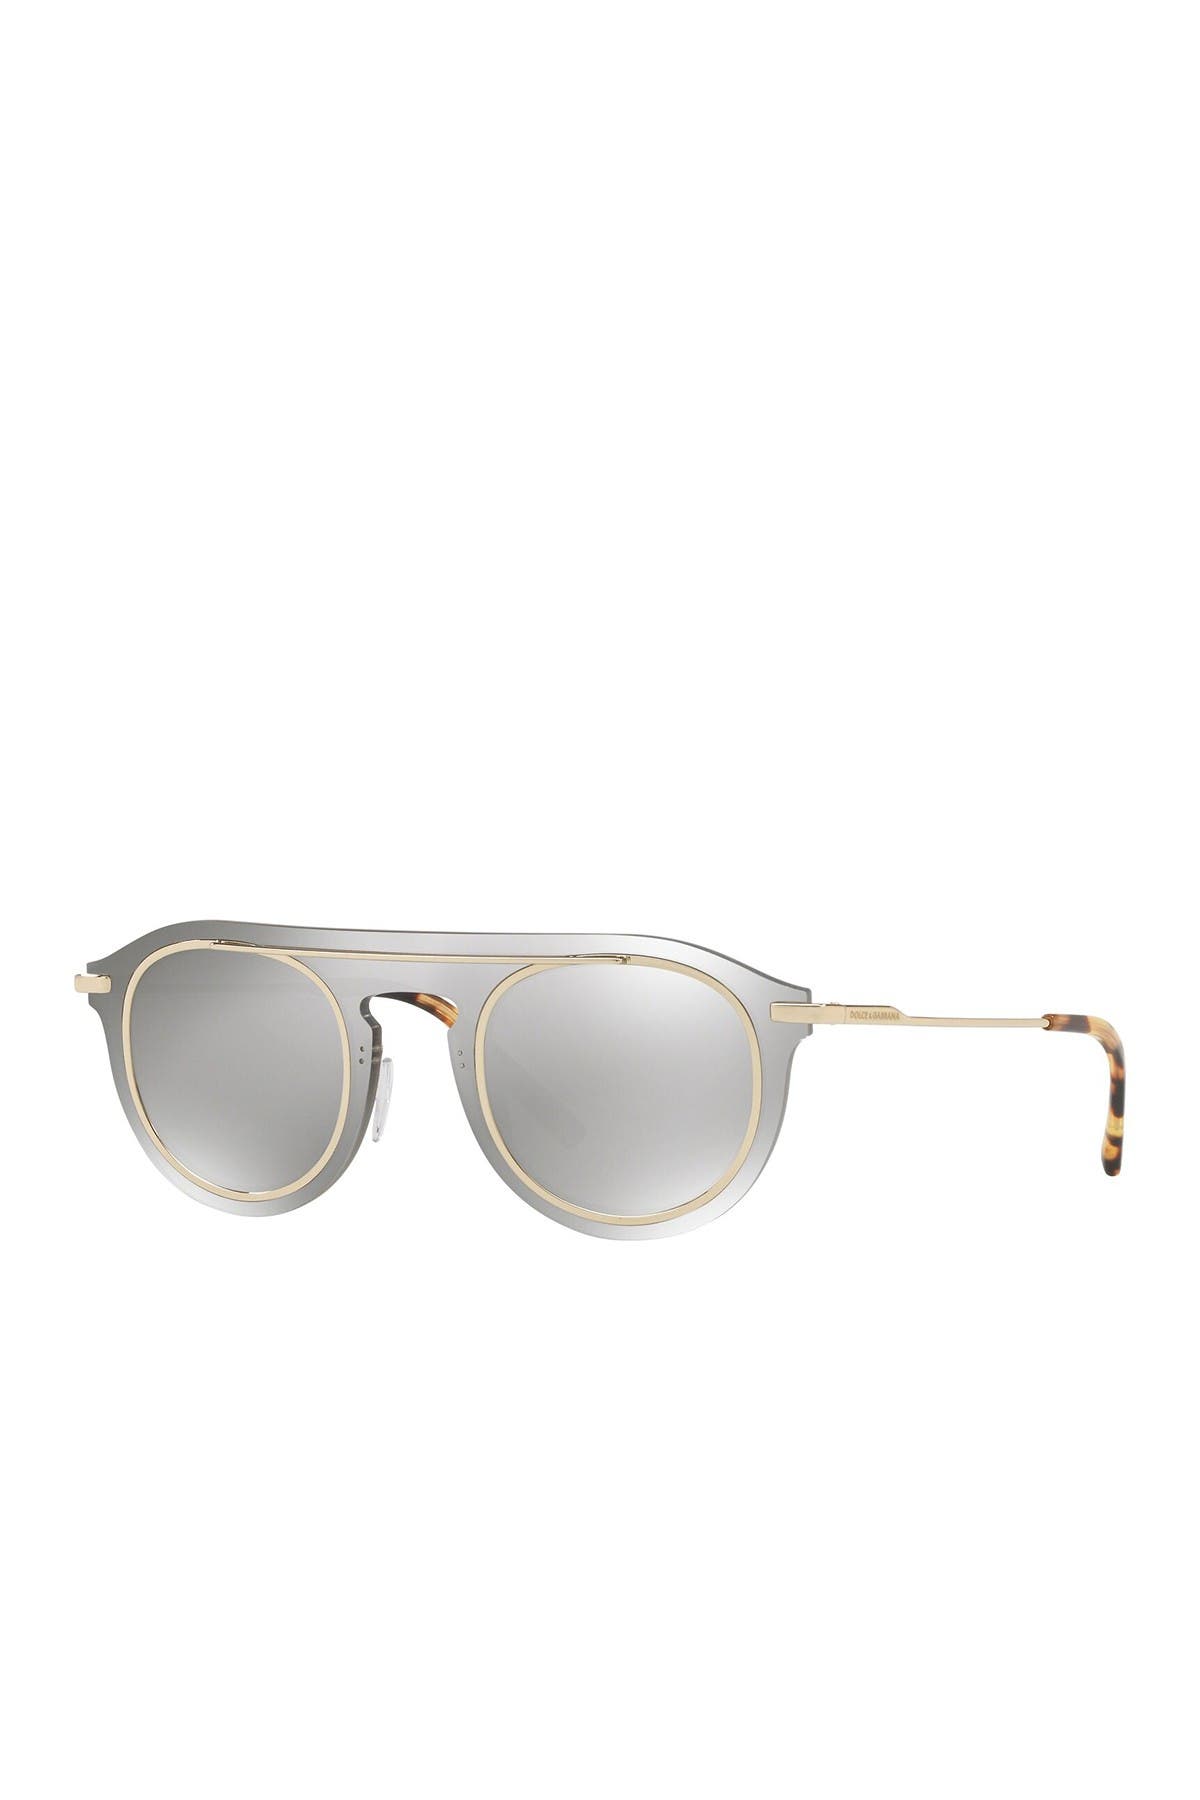 dolce & gabbana 48mm round sunglasses